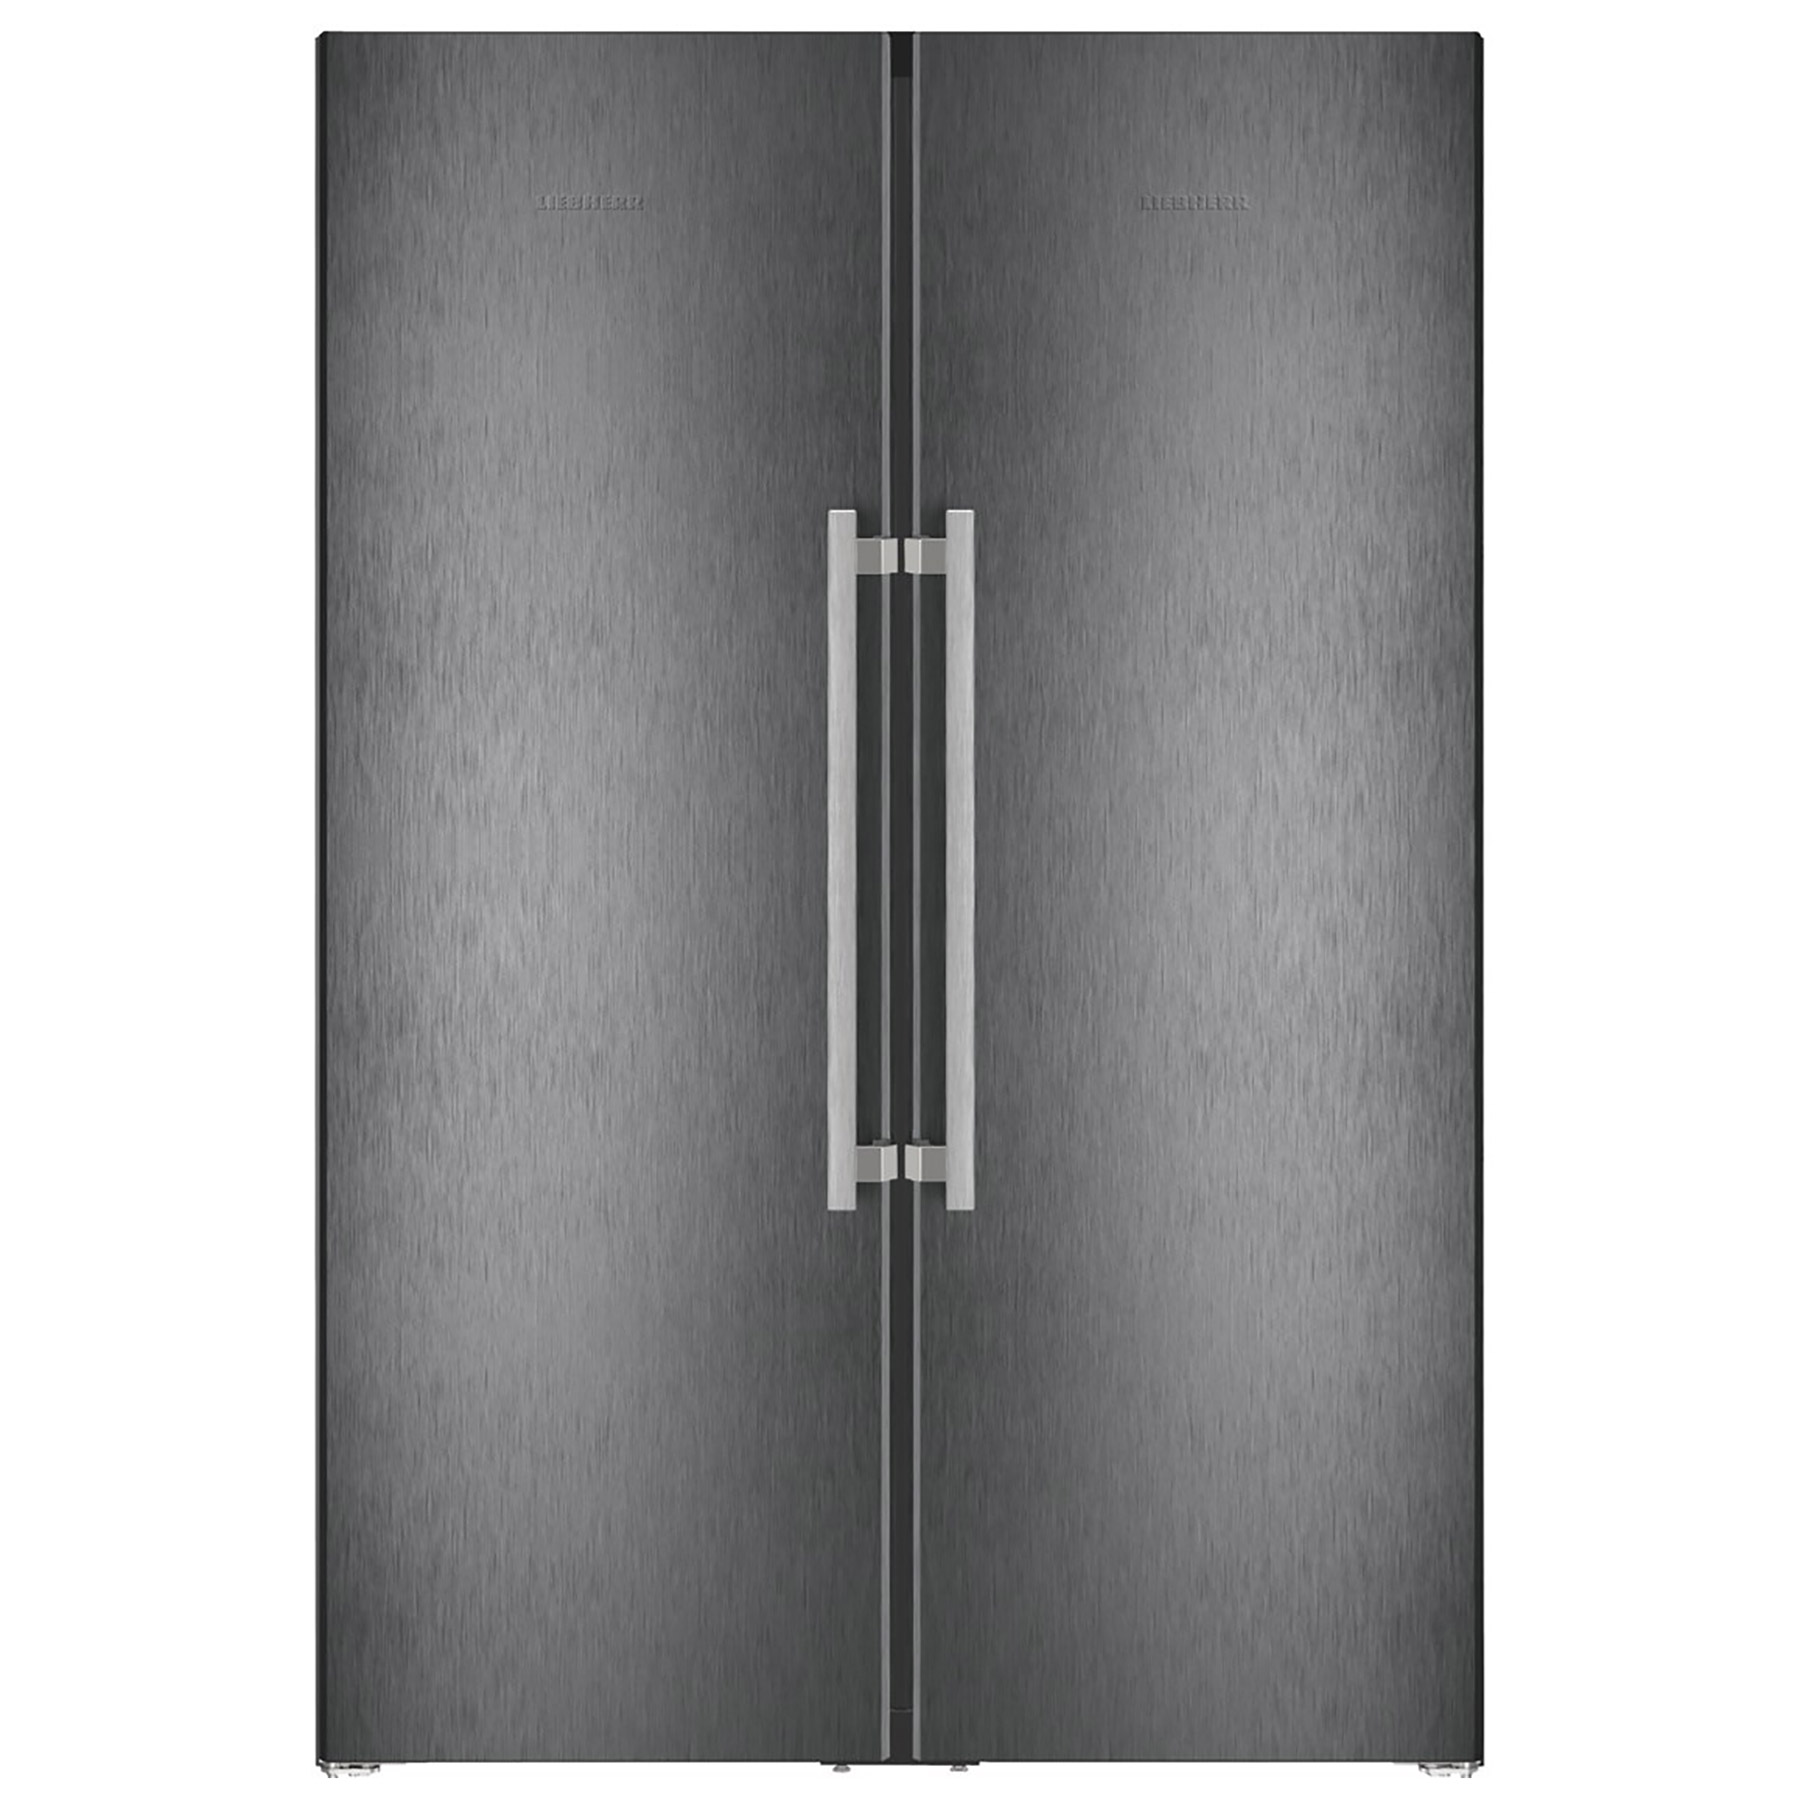 Image of Liebherr XRFBS5295 American Fridge Freezer in Black PL I W C D Rated